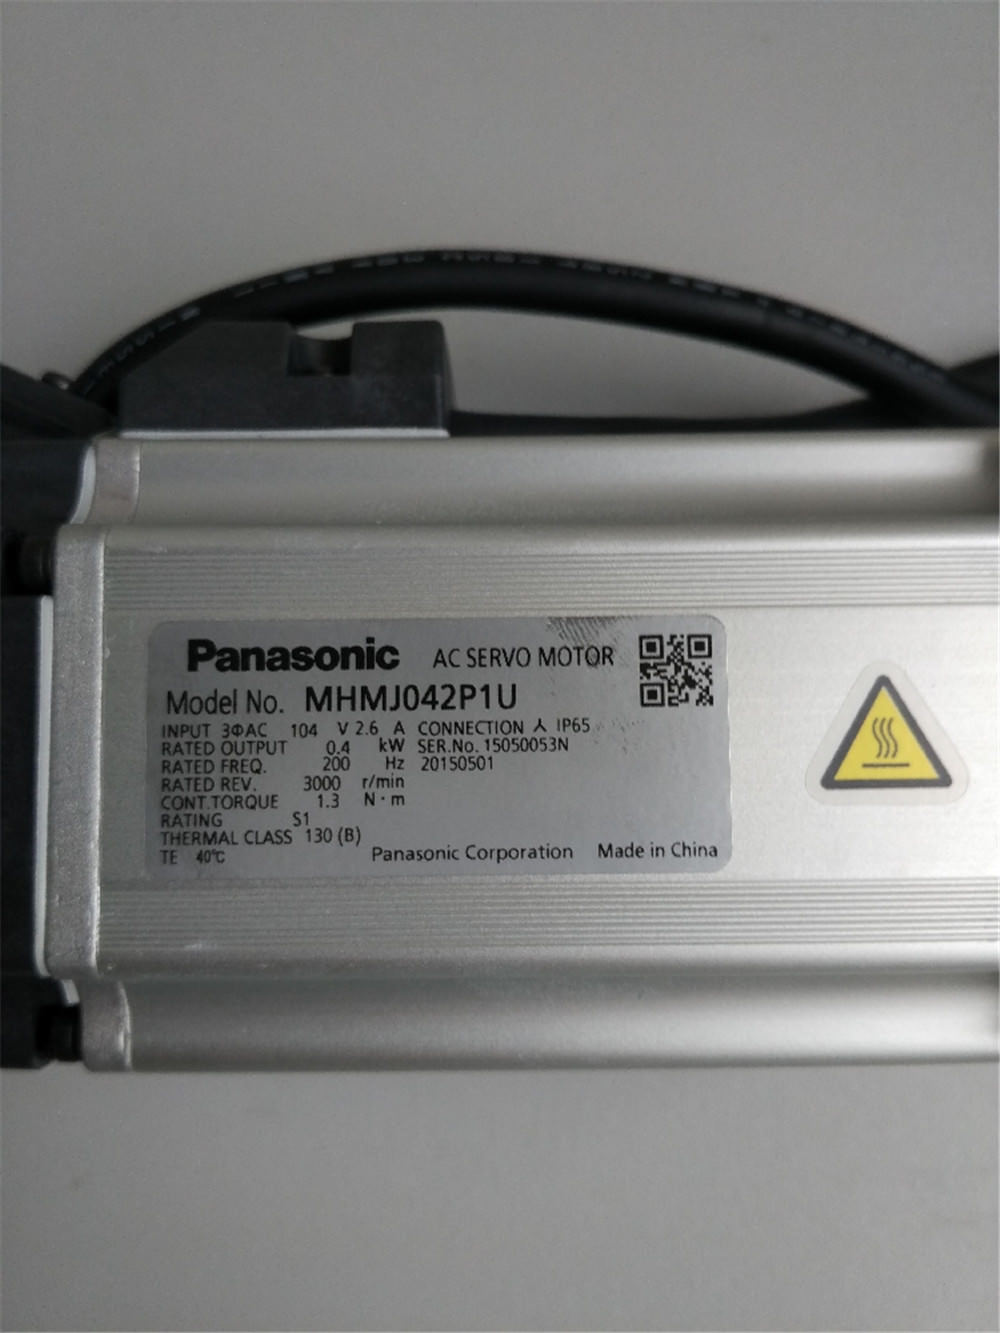 Brand New PANASONIC AC servo motor MHMJ042P1U in box - Click Image to Close